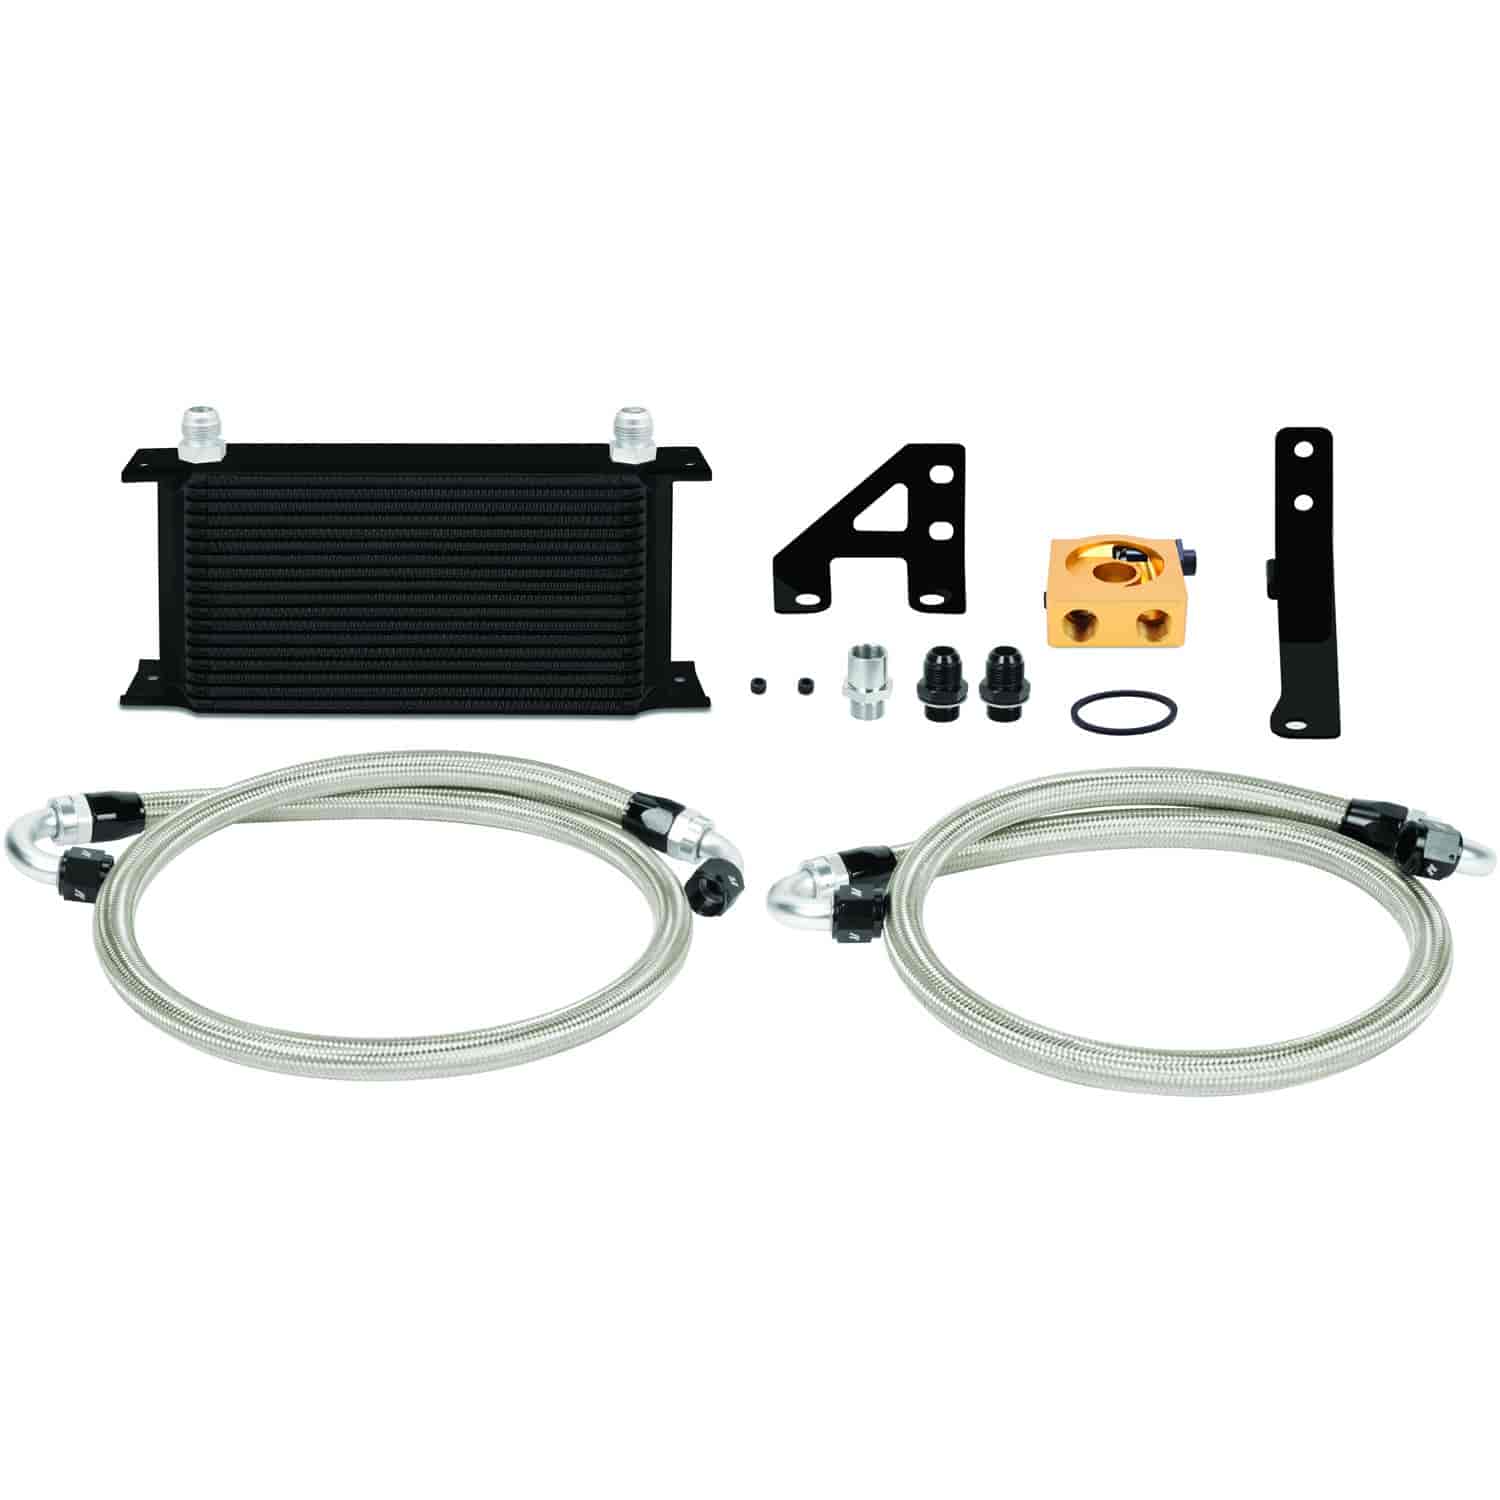 Subaru WRX STI Oil Cooler Kit - MFG Part No. MMOC-STI-15TBK